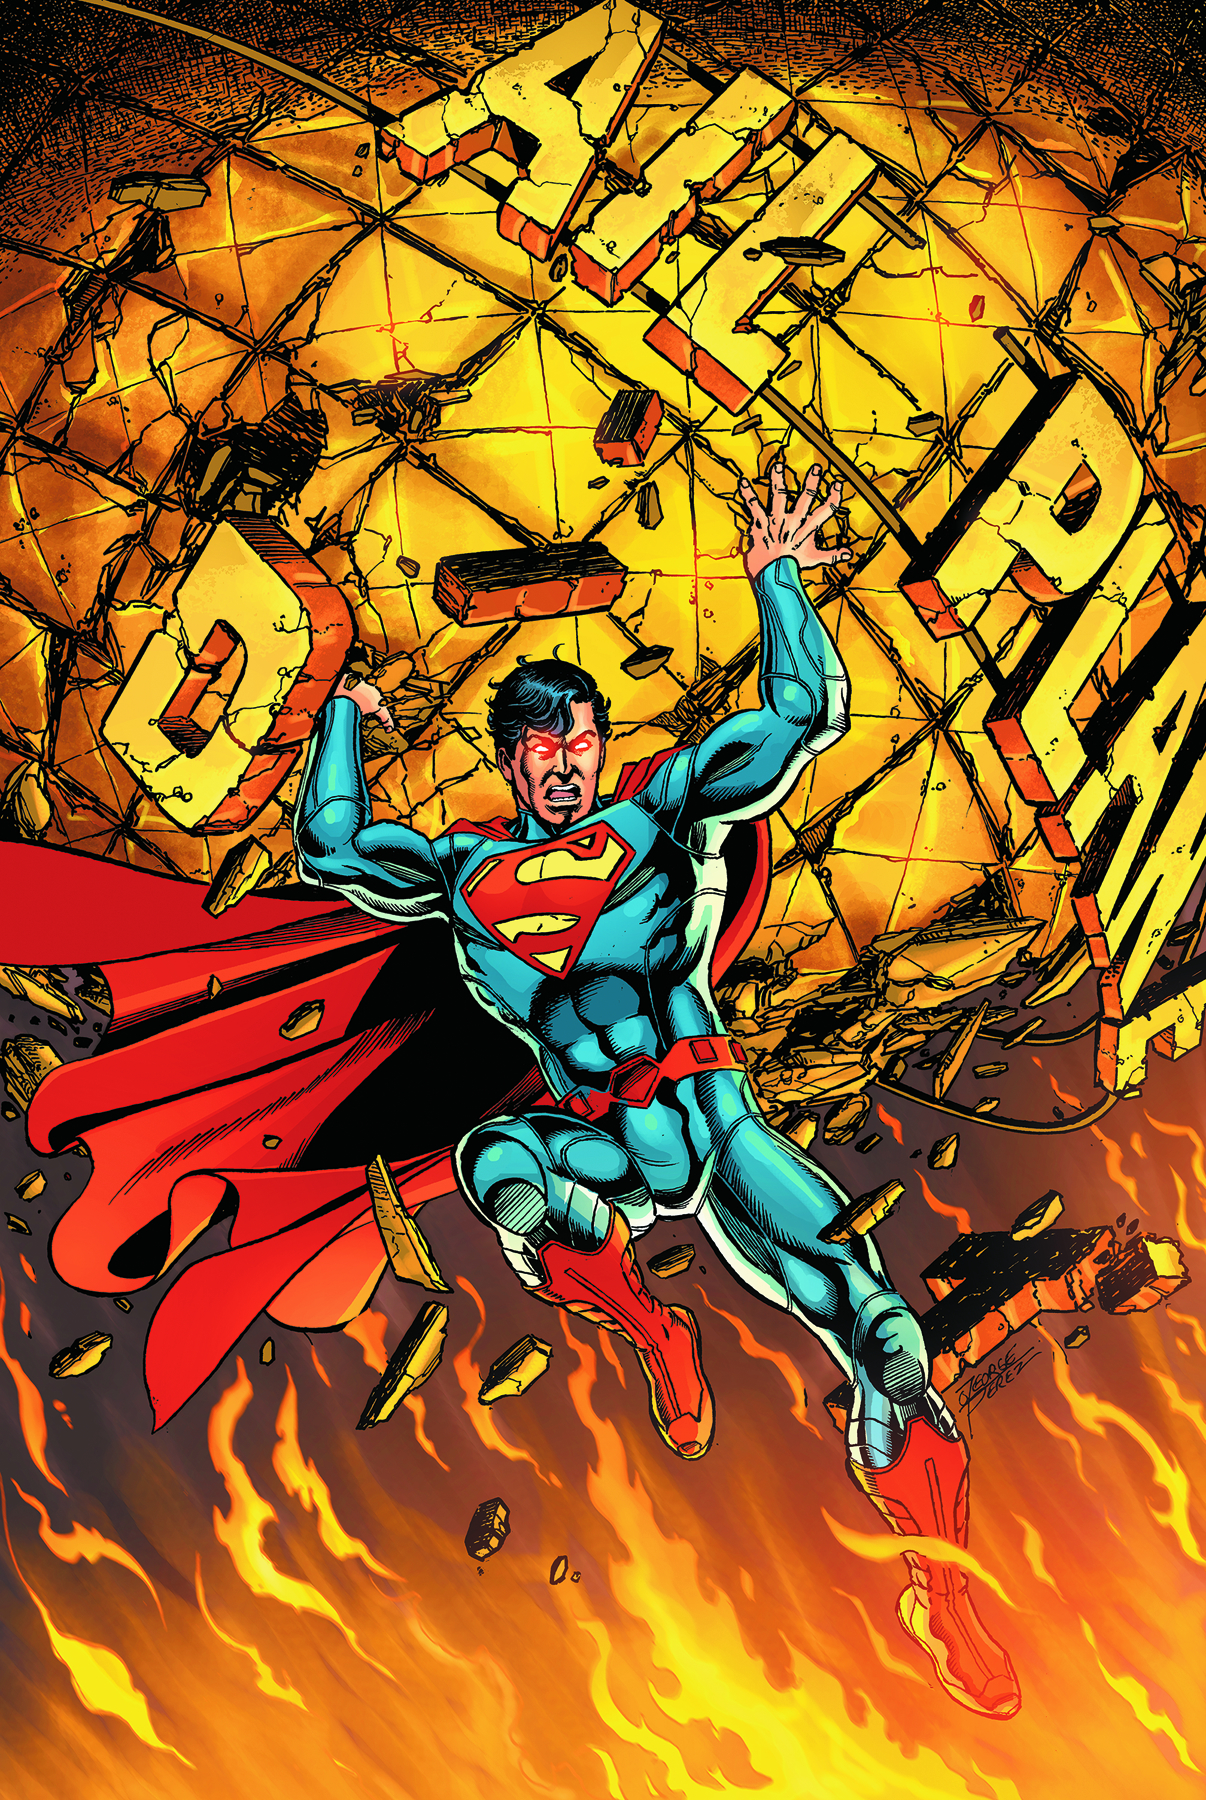 SUPERMAN #1